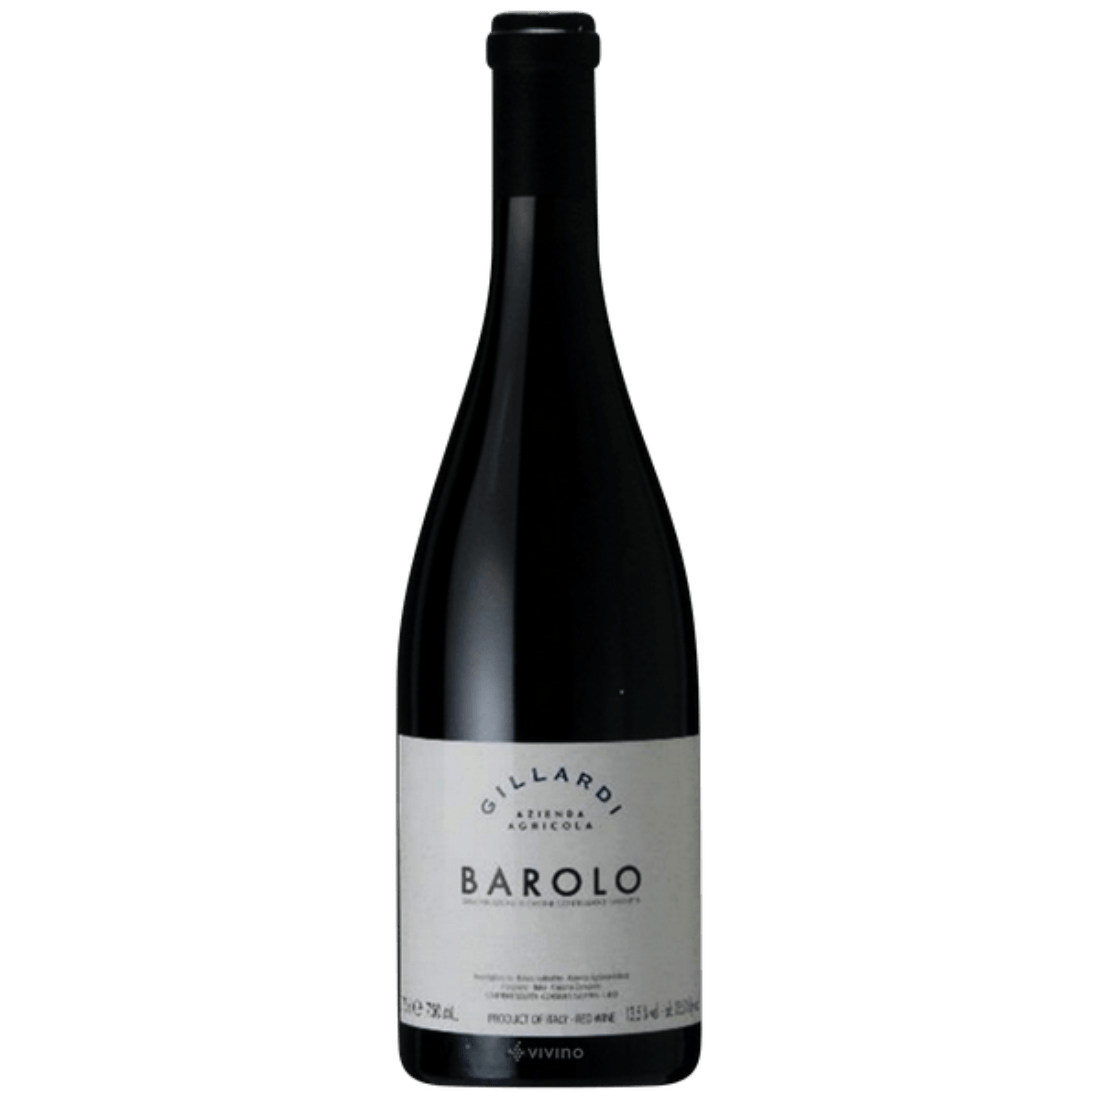 Barolo 2018 Docg - Gillardi-Vinolog24.com